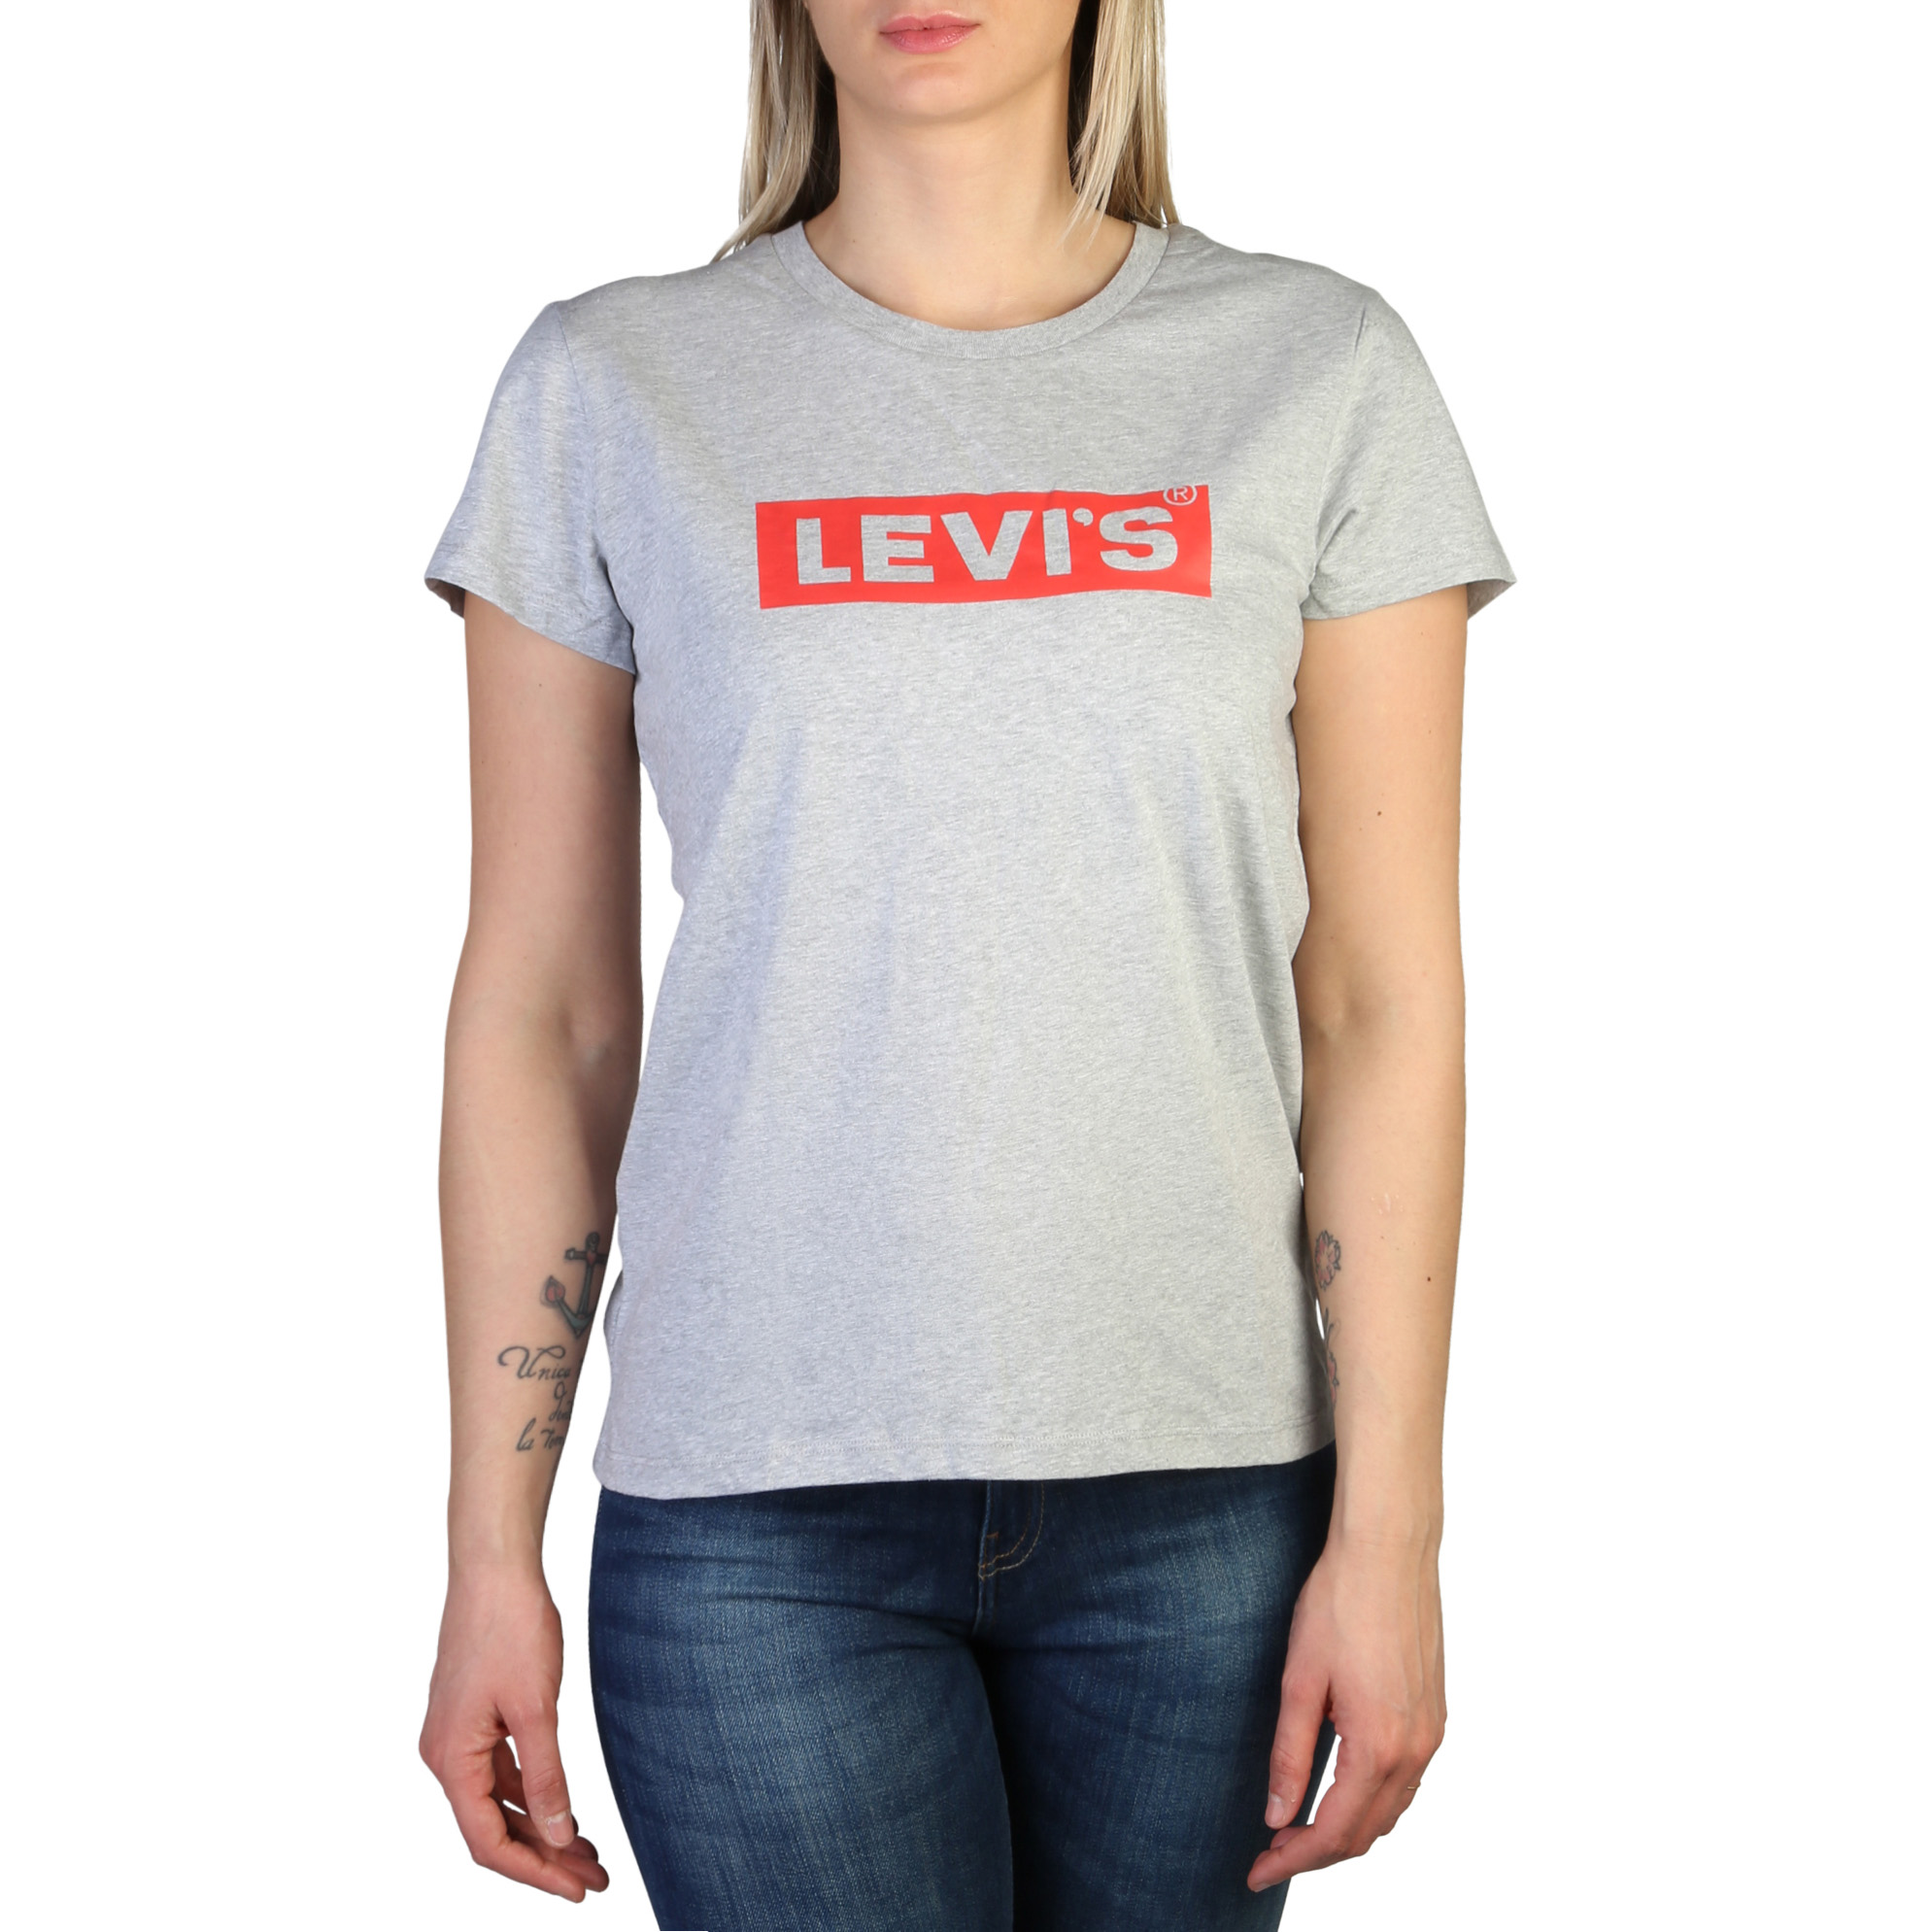 Levis - T-shirt femme